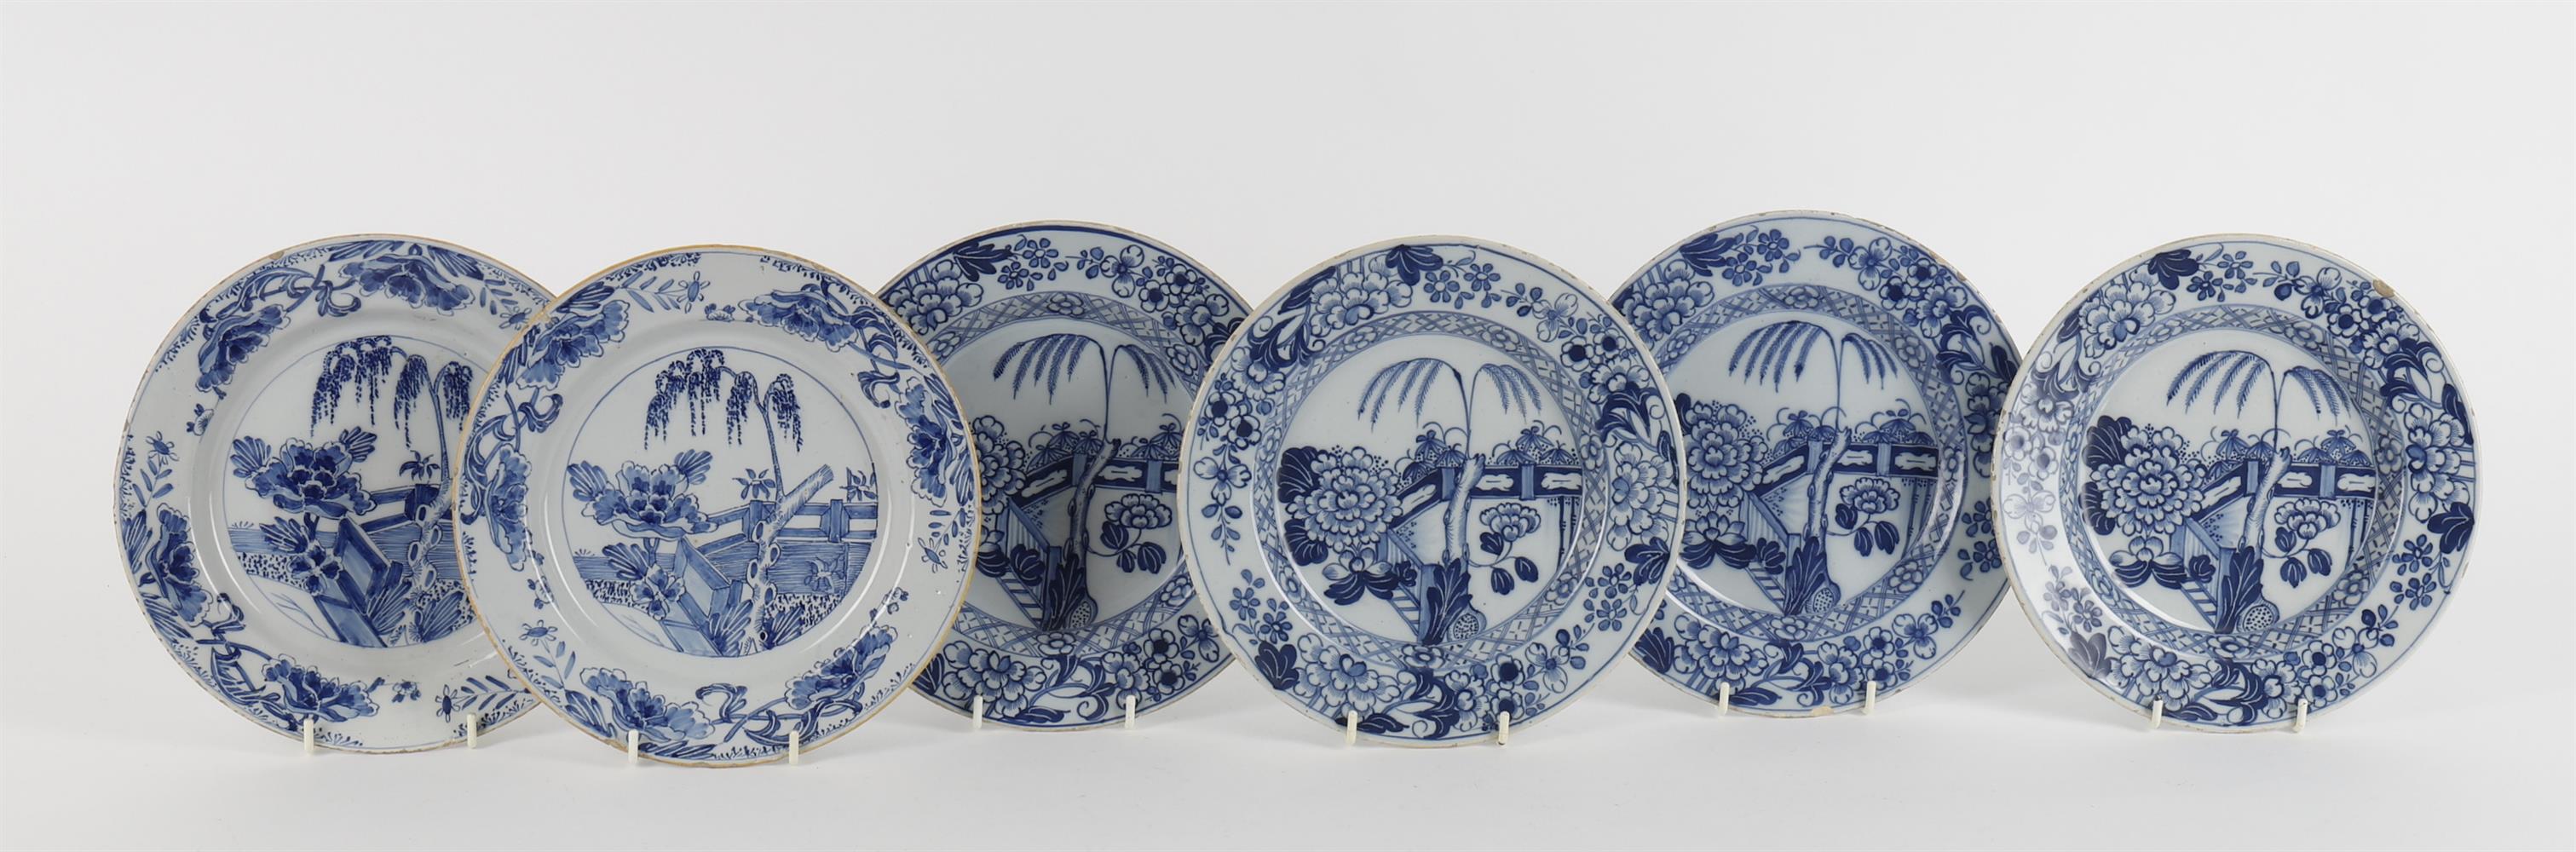 Six 18th century Dutch blue and white delft plates